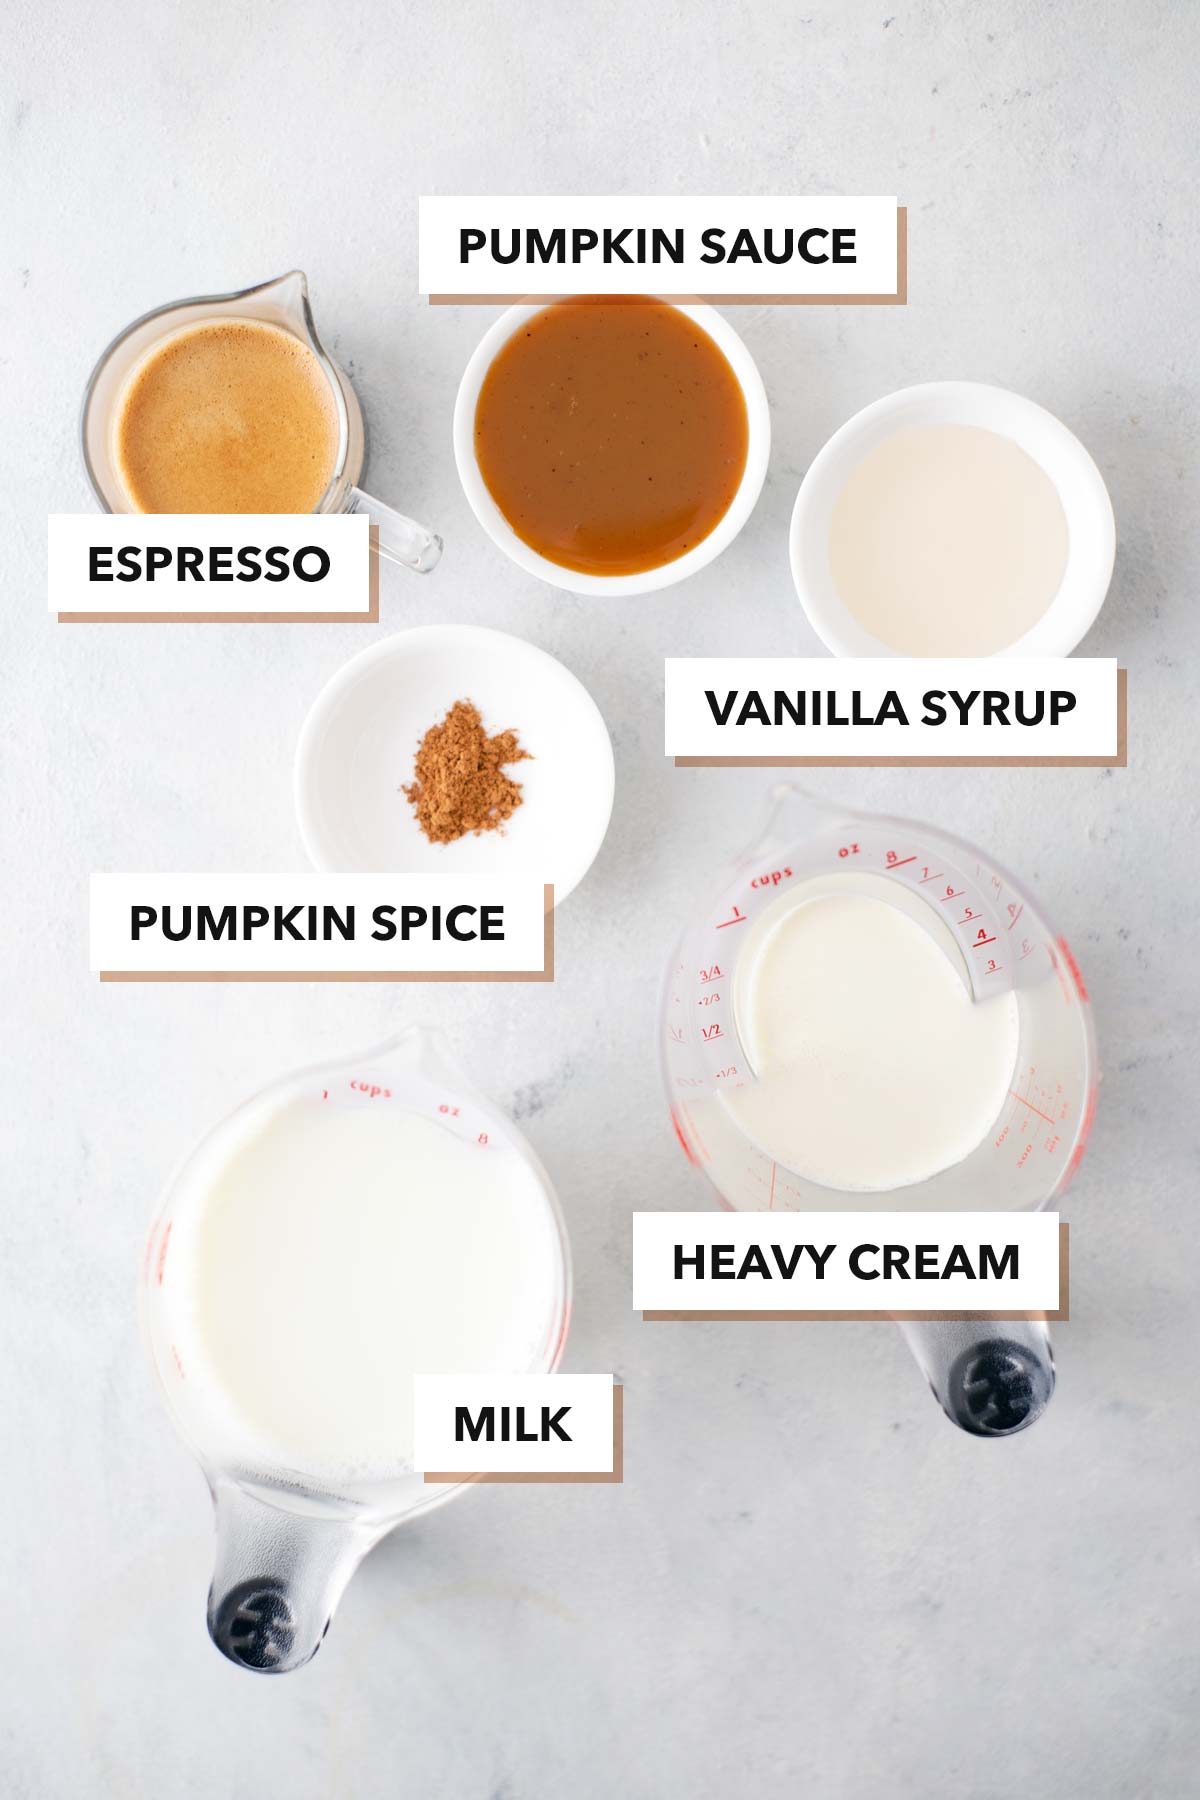 Pumpkin Spice Latte ingredients.